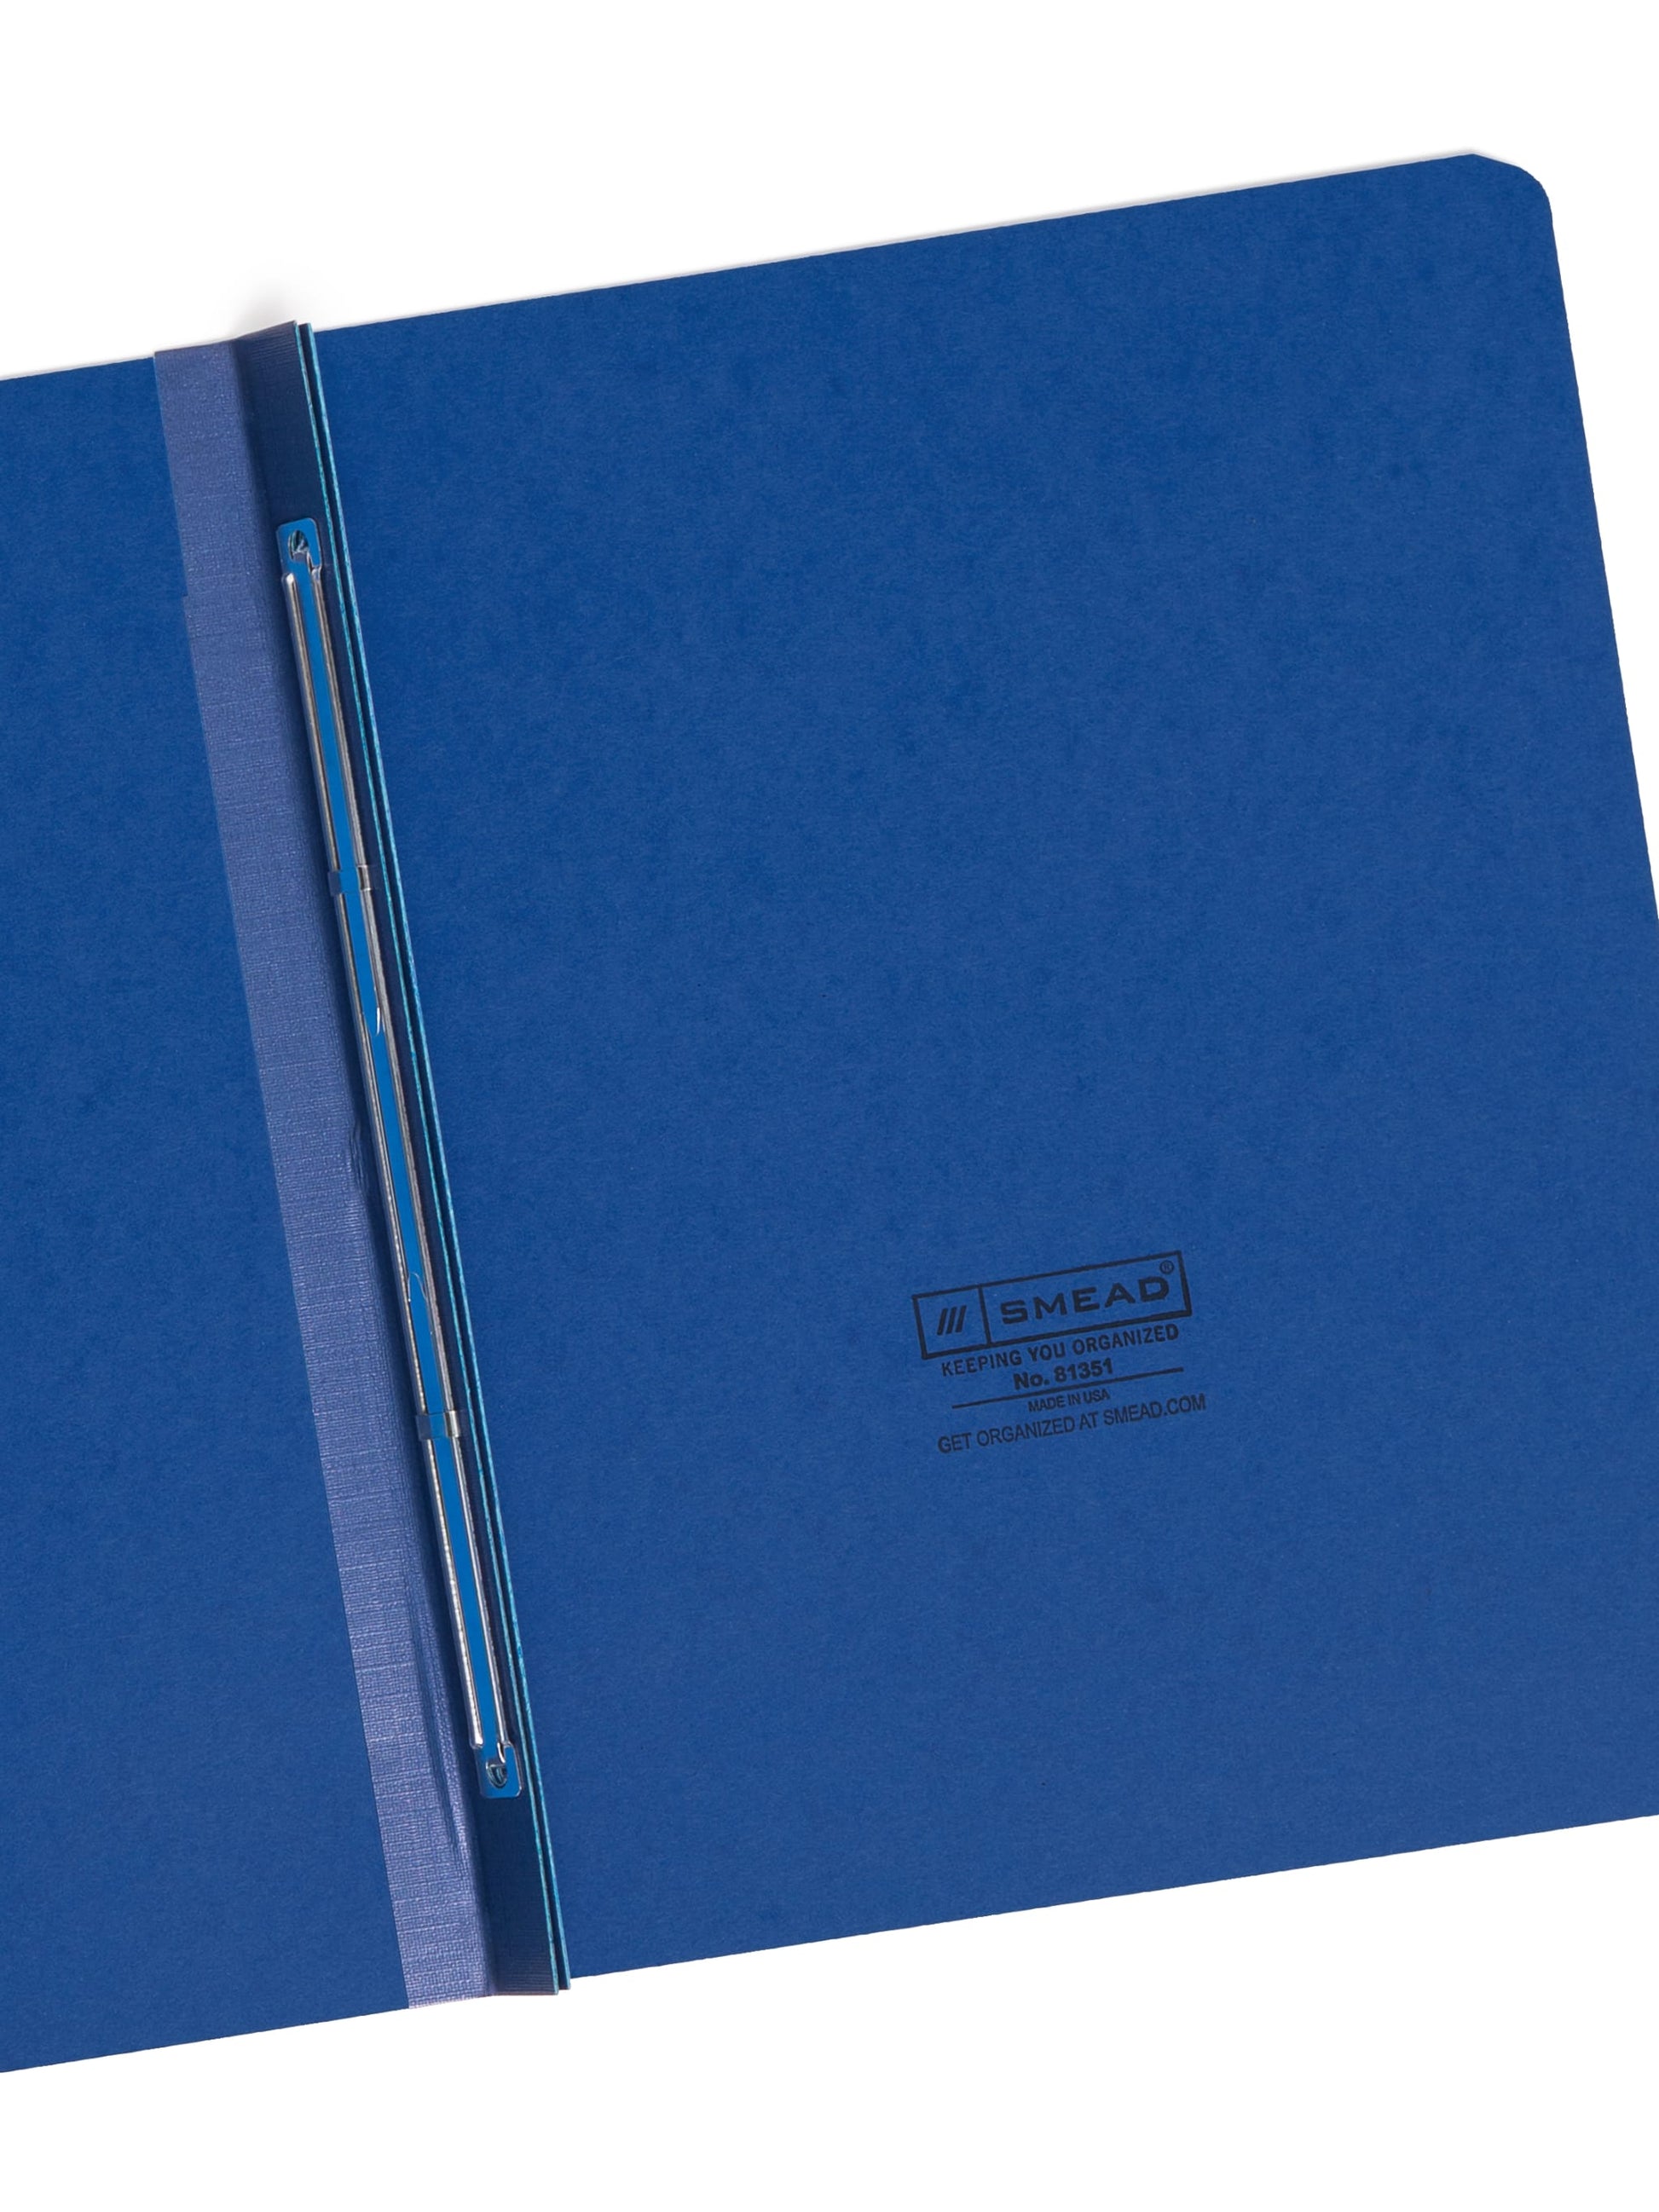 Premium Pressboard Report Covers, Metal Prong with Compressor, Side Fastener, 3 inch Expansion, 1 Fastener, Dark Blue Color, Letter Size, Set of 0, 30086486813519